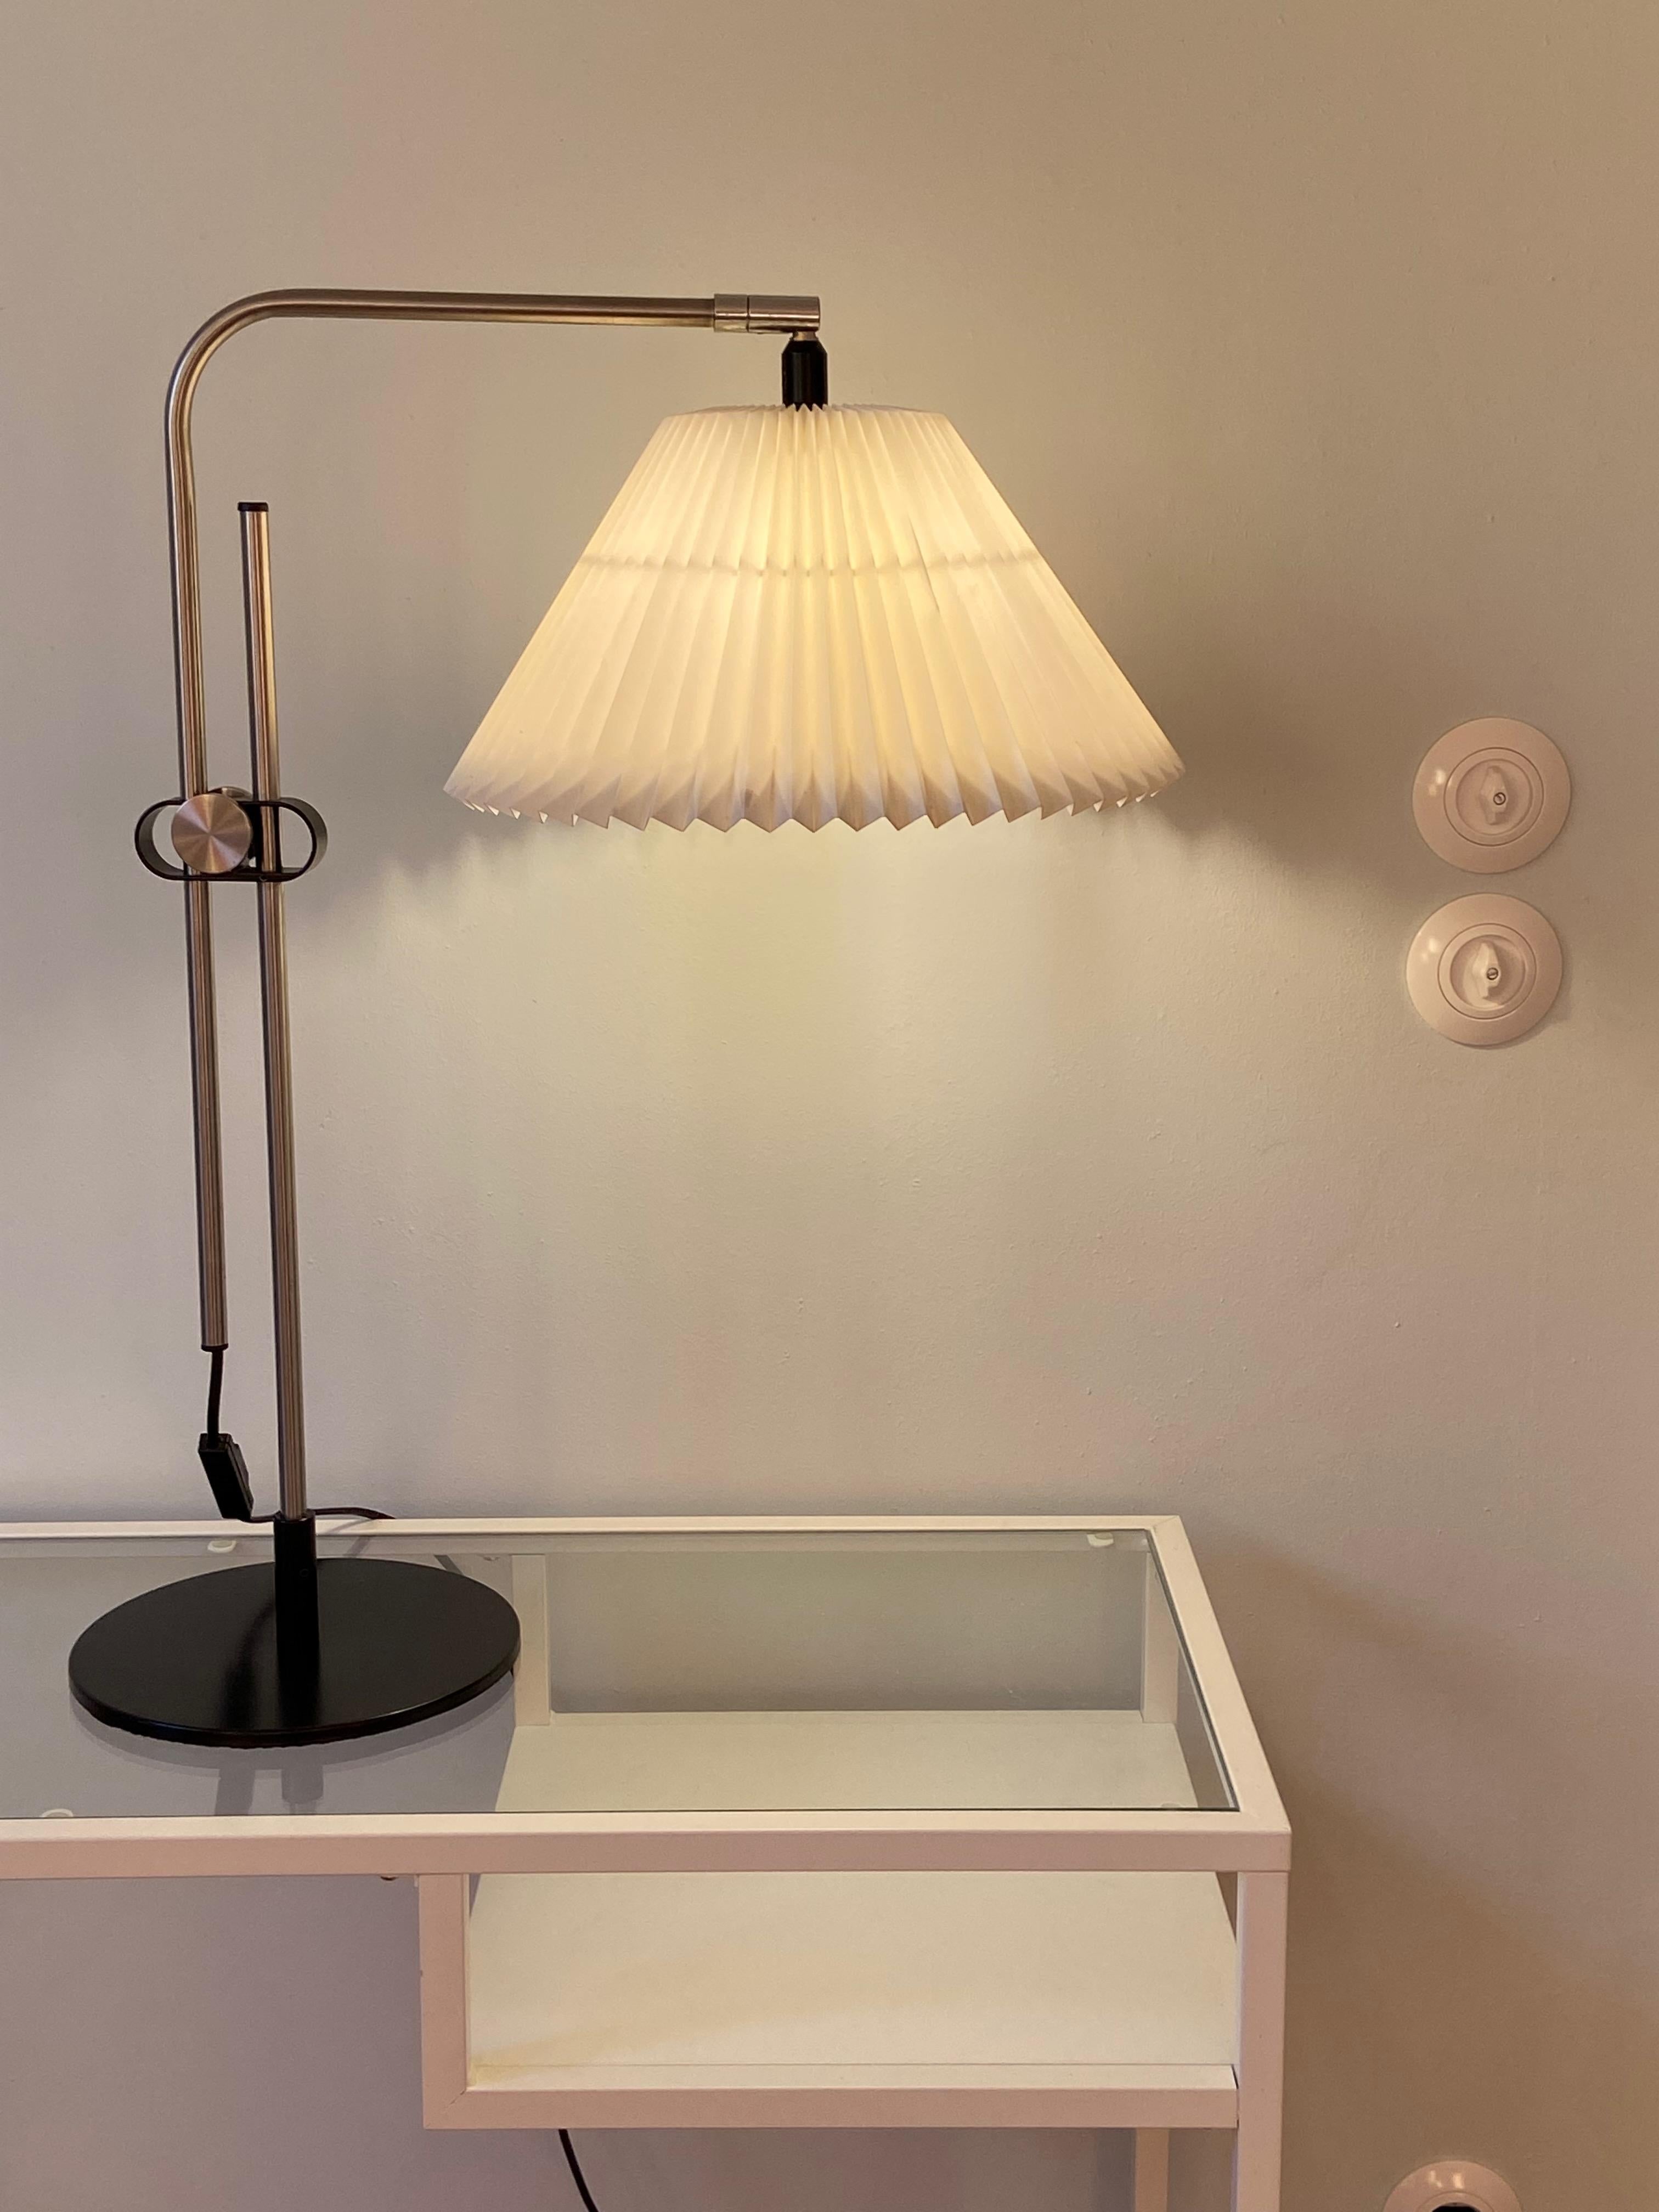 Leklint Table Lamp Mod. 320 Design by Michael Bang for Le Klint Denmark 1